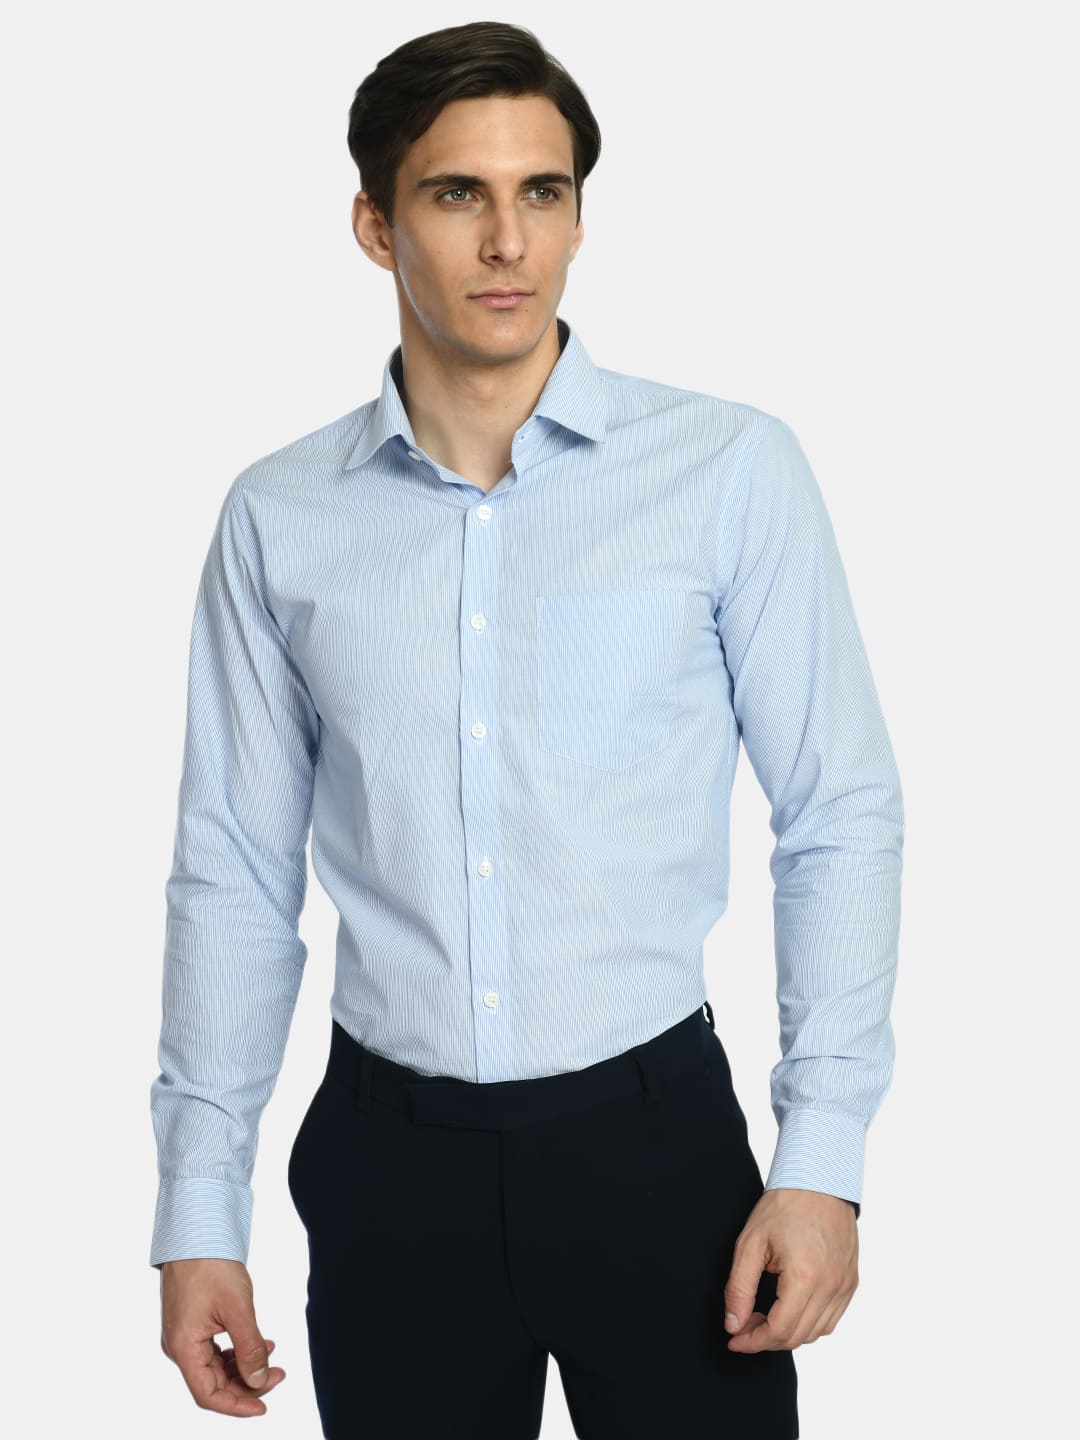 Men's Sky blue Stripes Cotton Formal Shirt